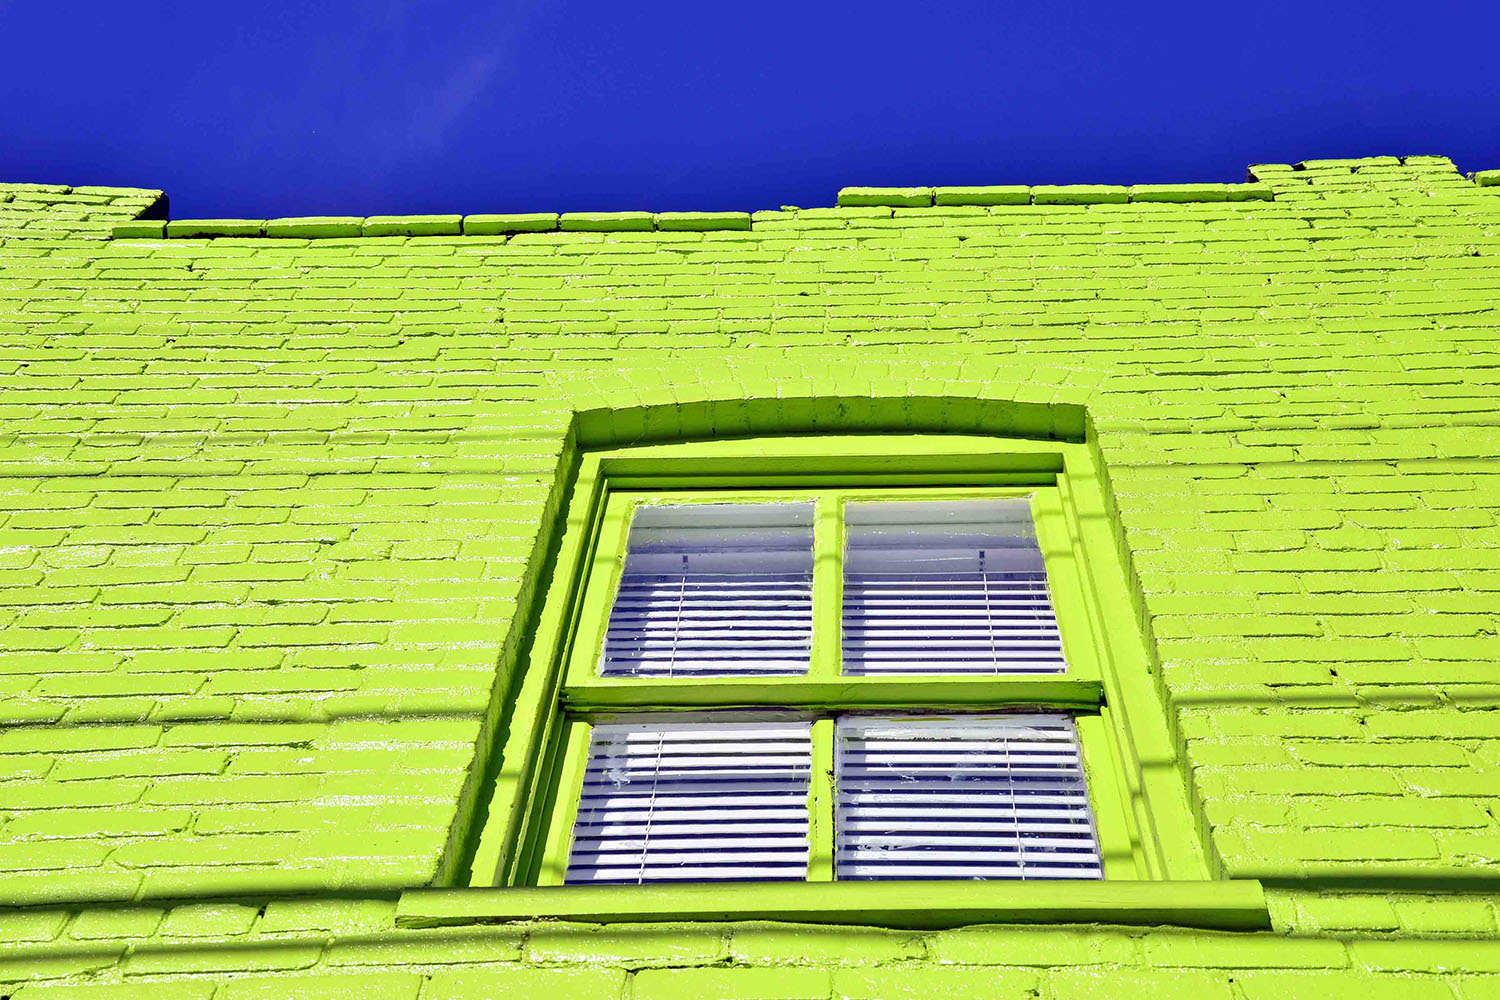 Architecture_Building_Cafe_Keylime_Green_Blue_Sky_Richmond_Virginia_RVA.jpg